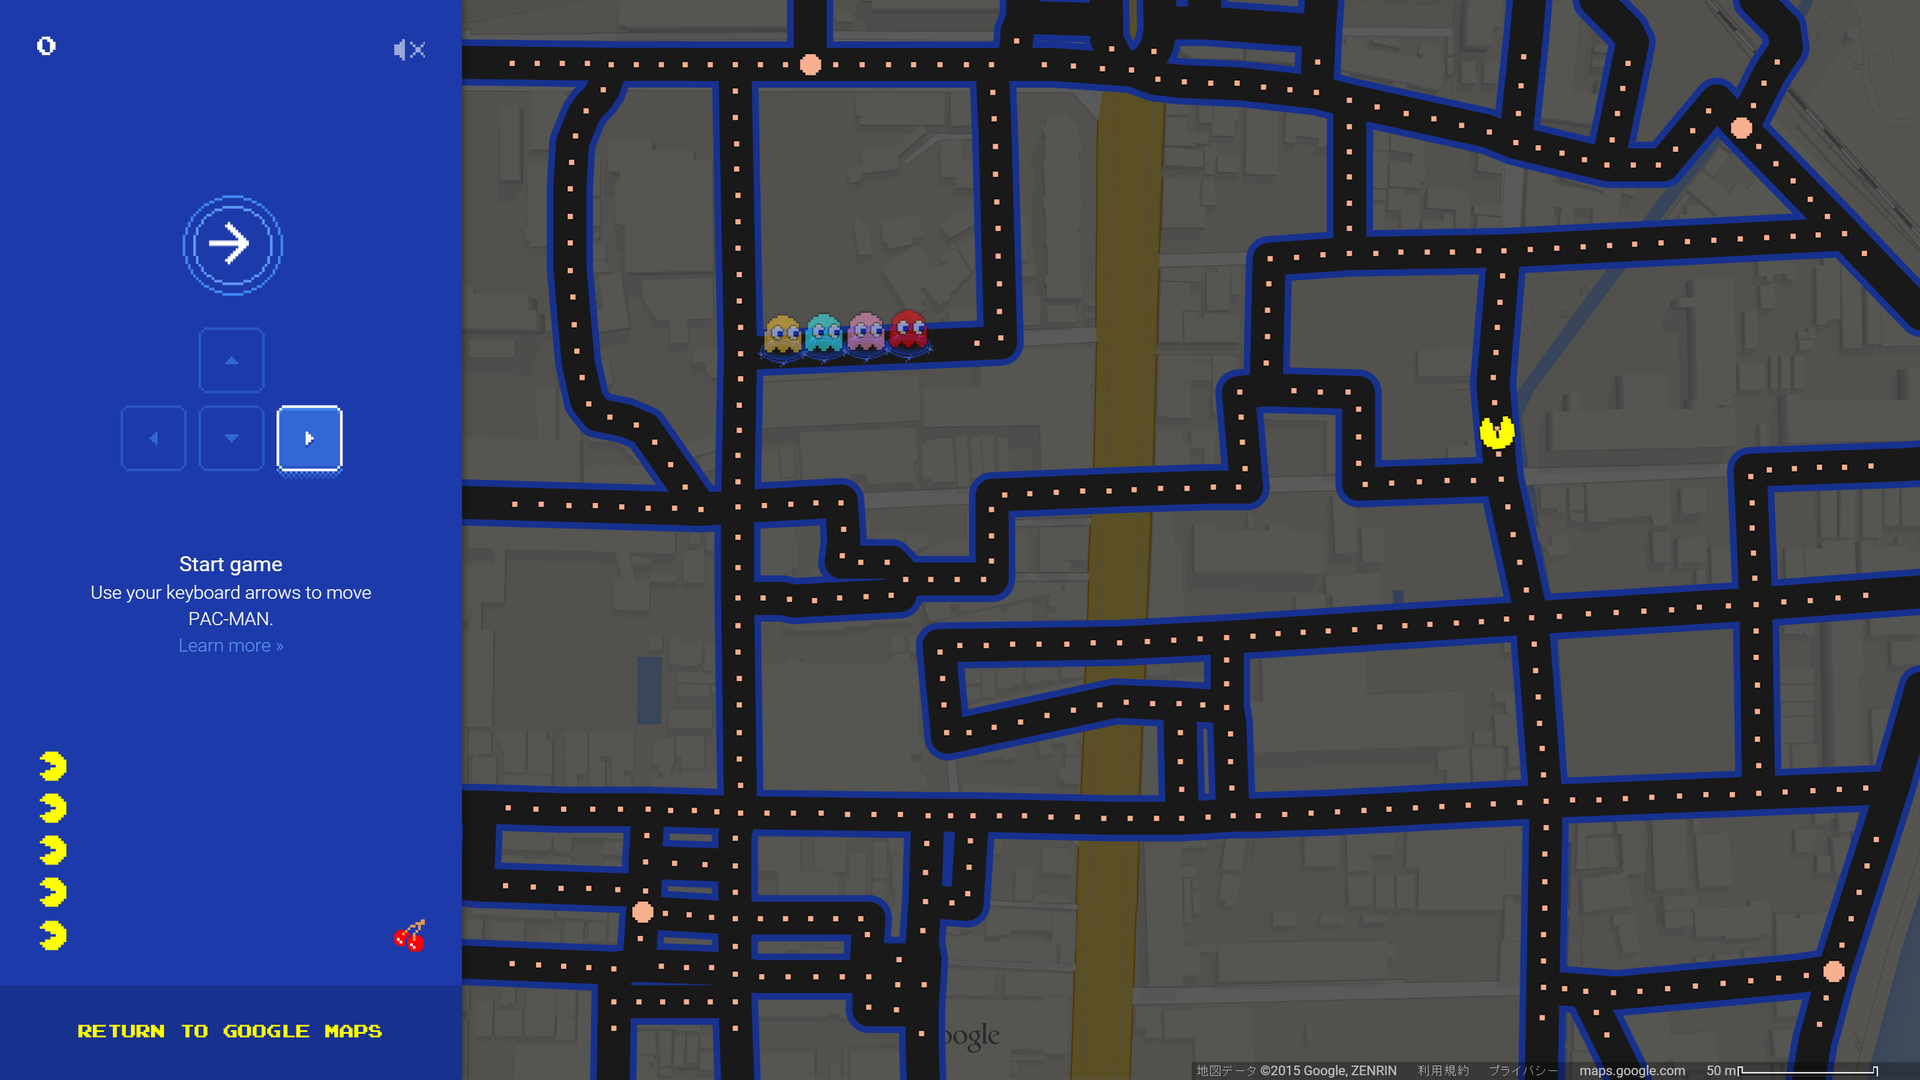 Making a Google Maps game 